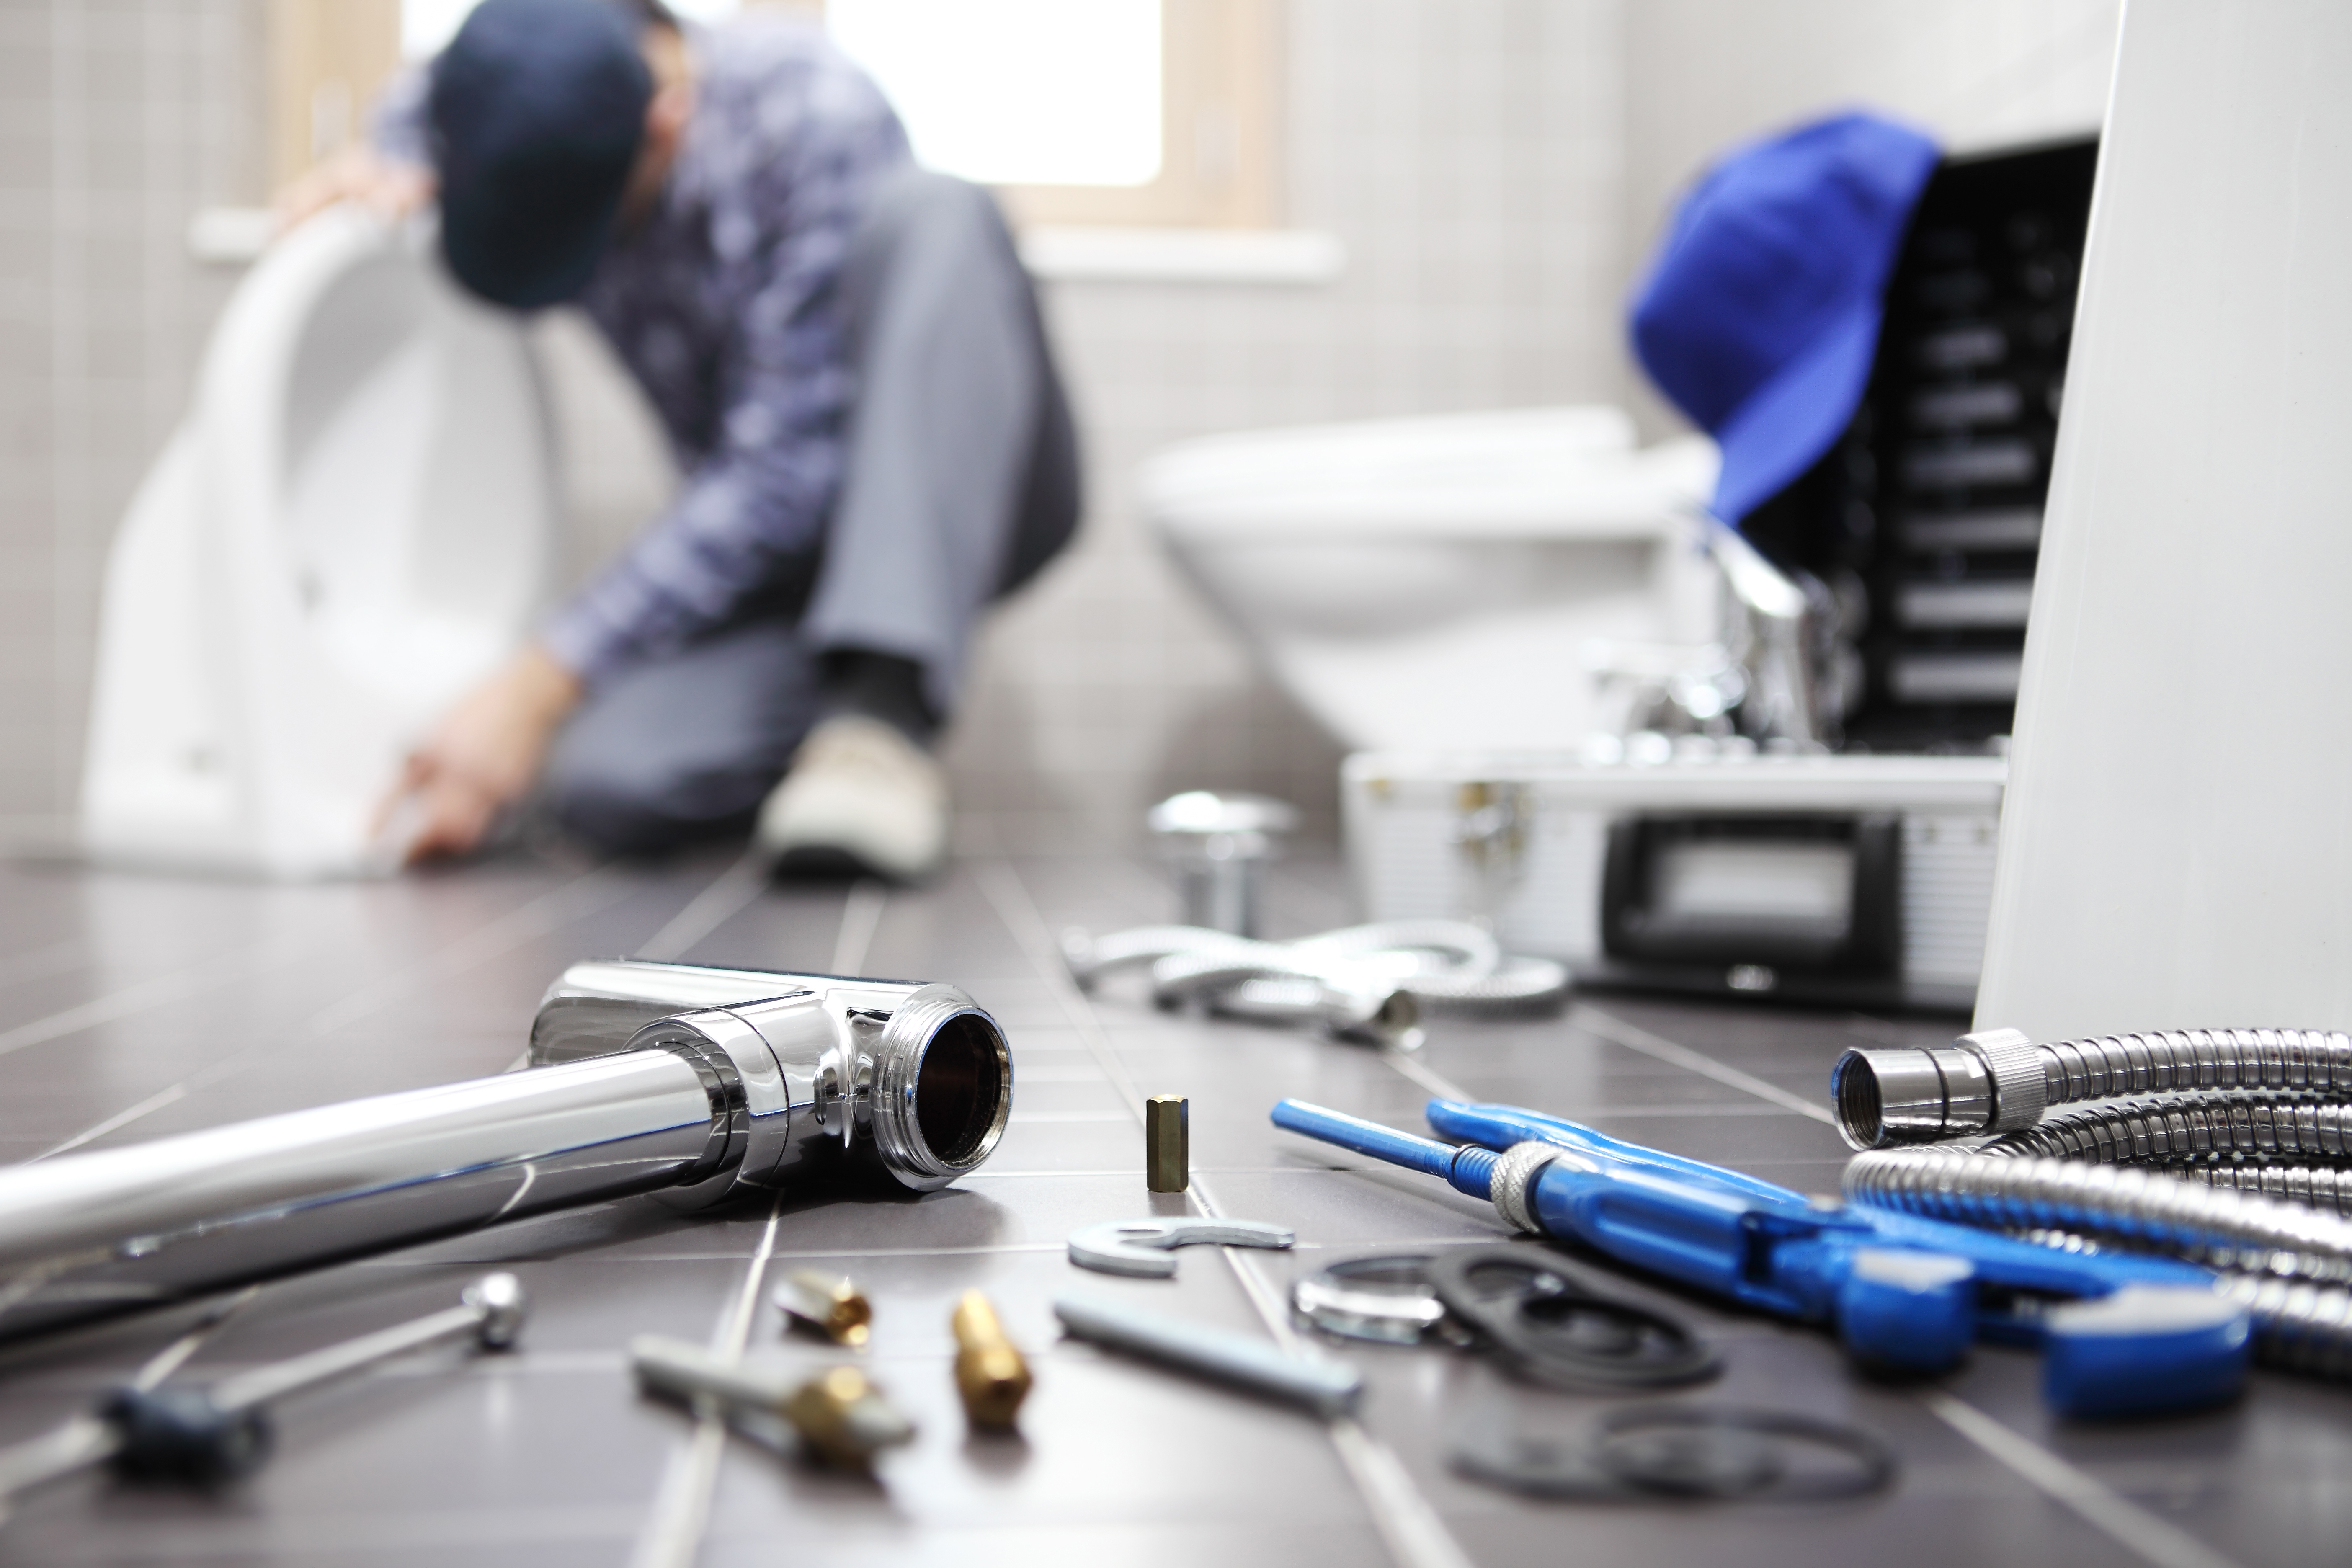 A plumber hard at work | Source: Shutterstock